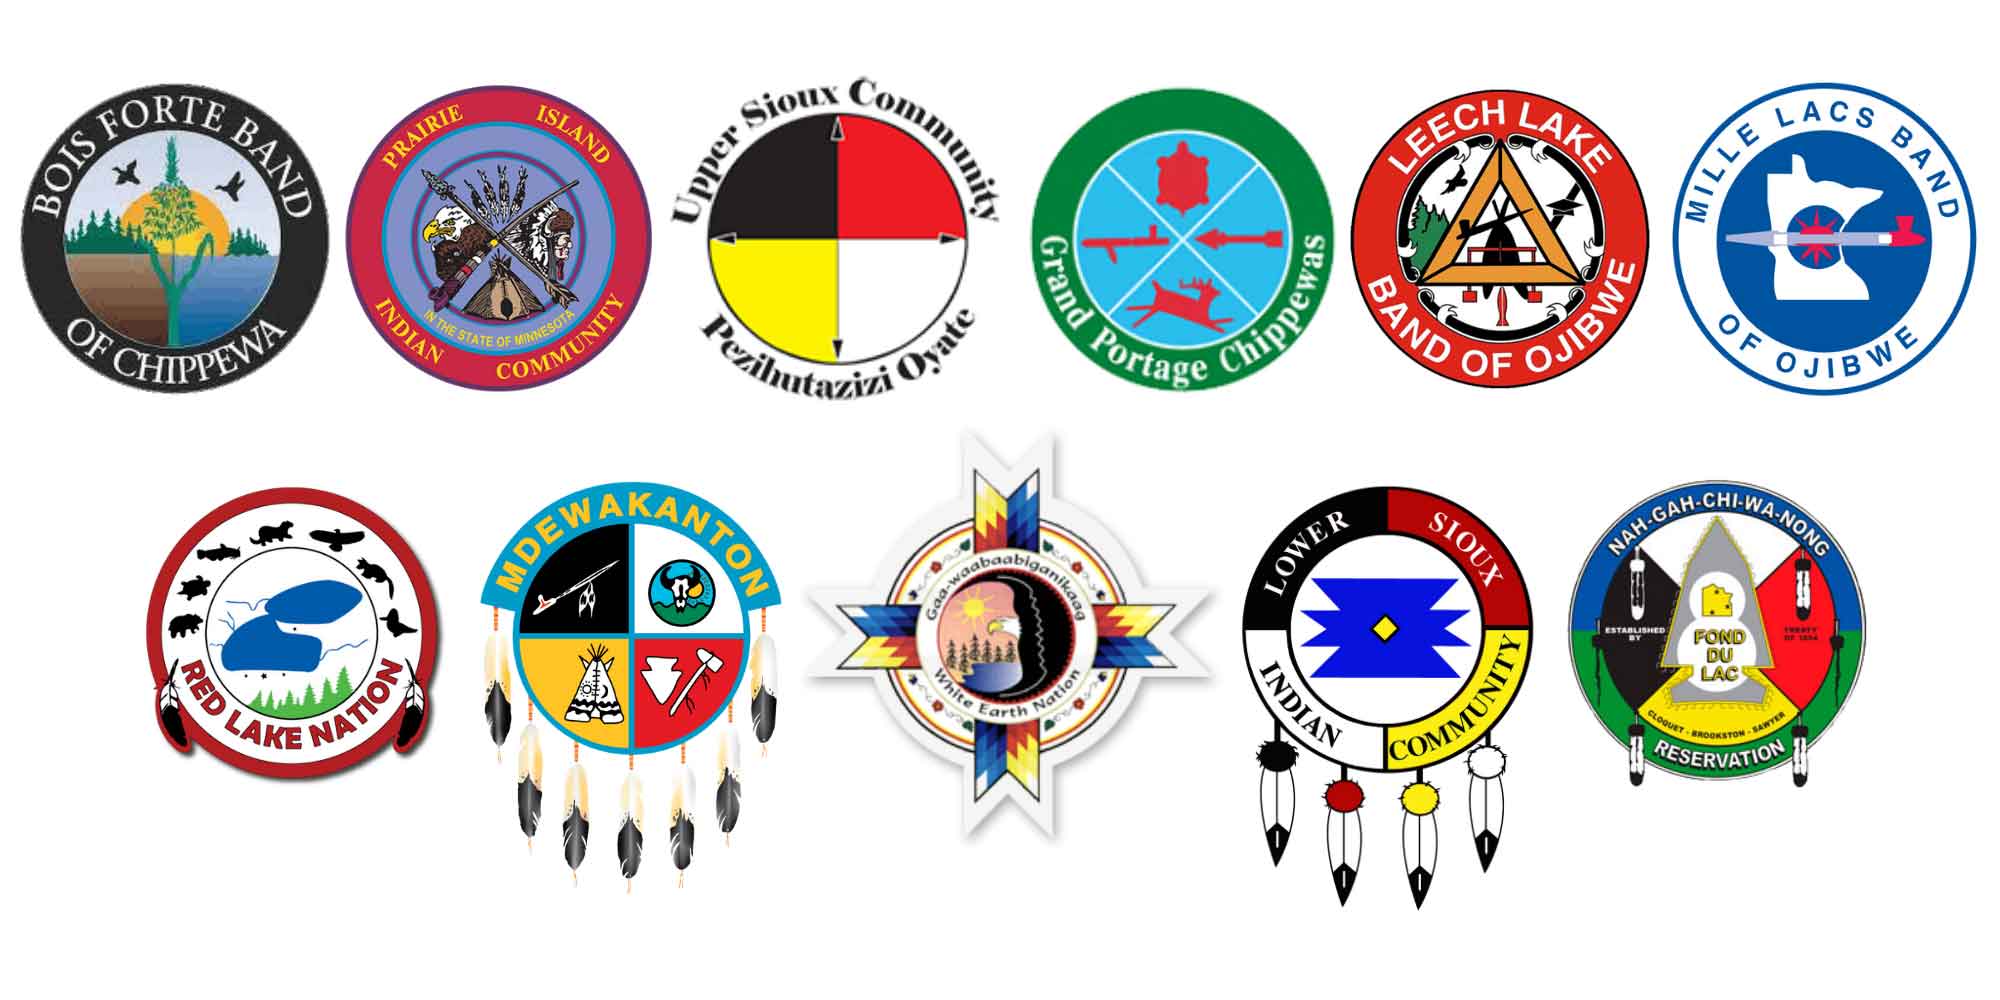 Minnesota's tribal nation's tribal logos